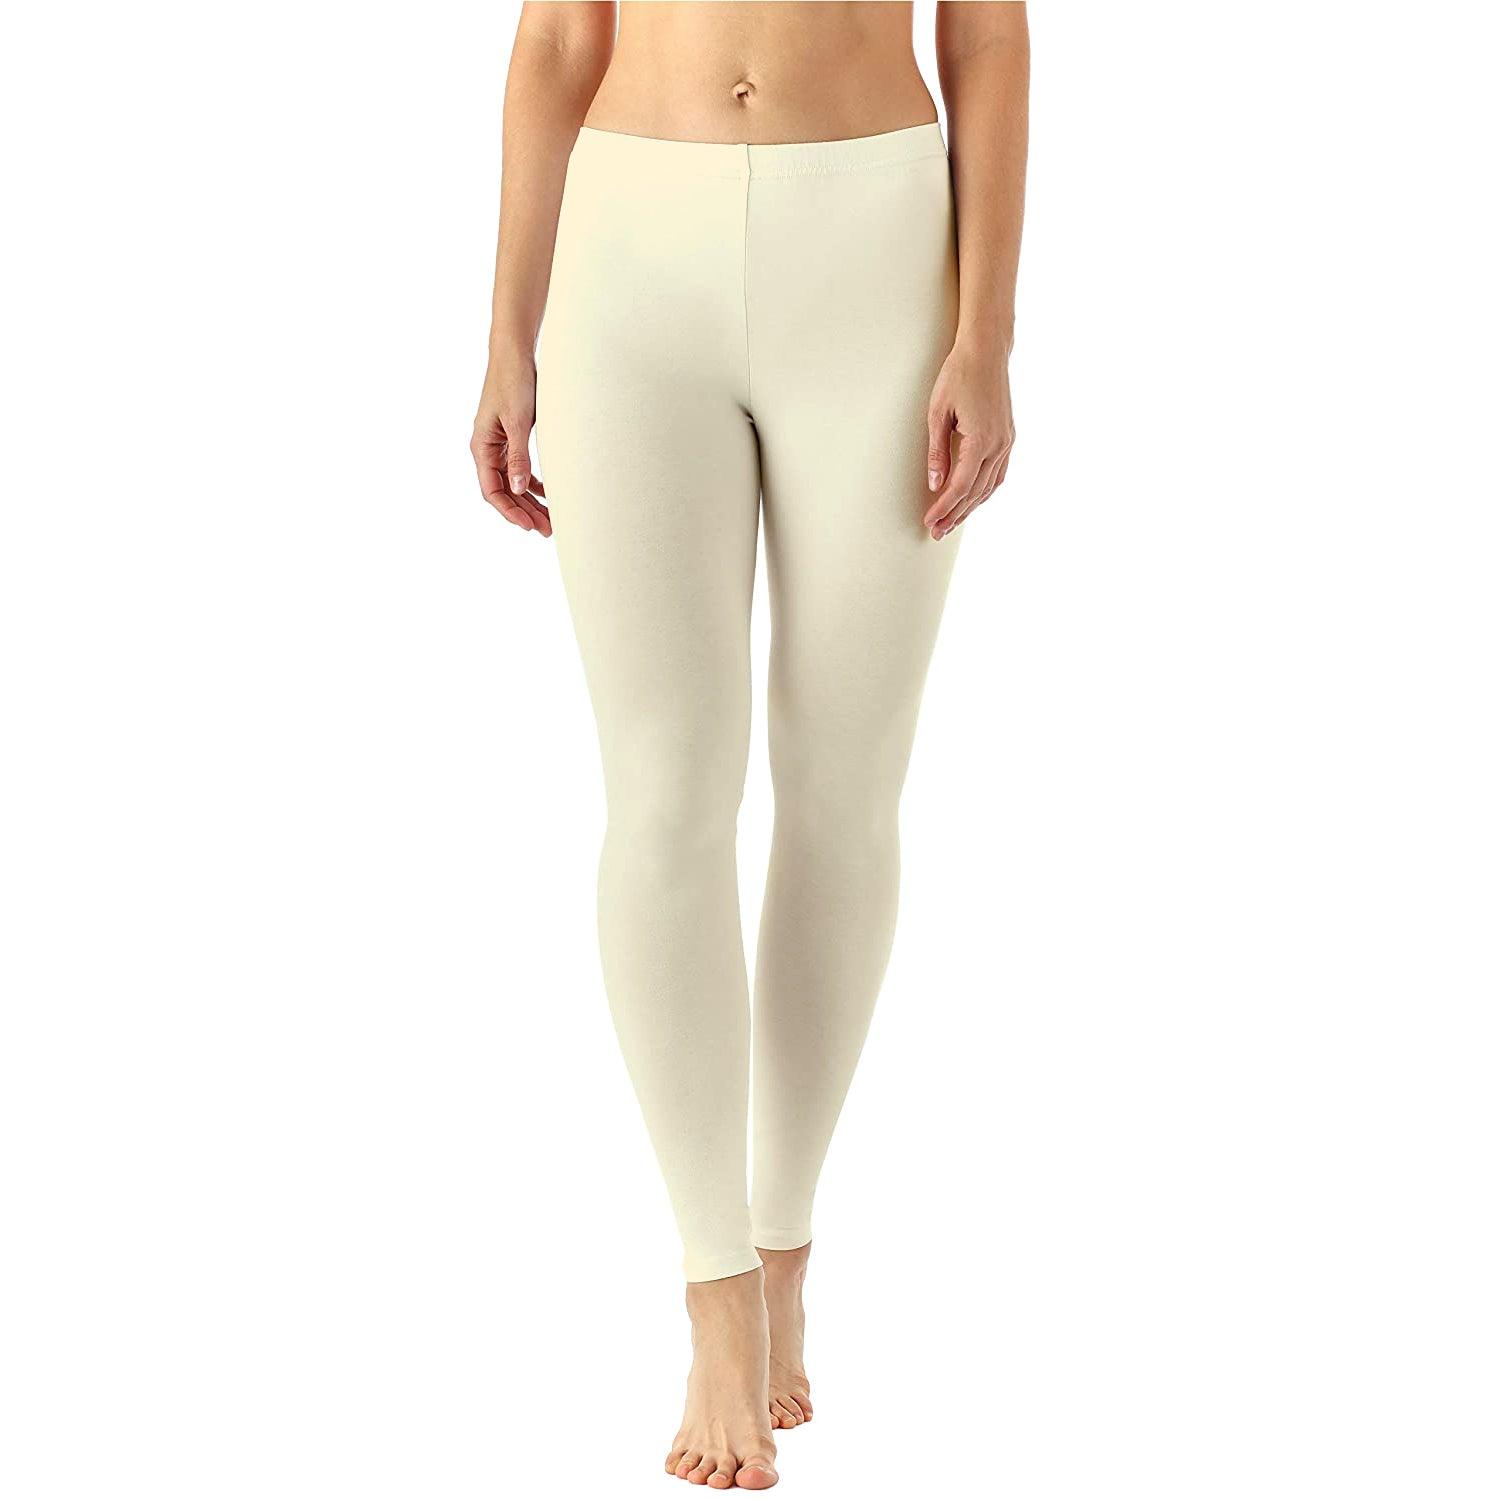 Zindwear Women's Cotton Soft Plain Summer Stretchy Ankle Length Leggings (One Size, Cream) - Walgrow.com